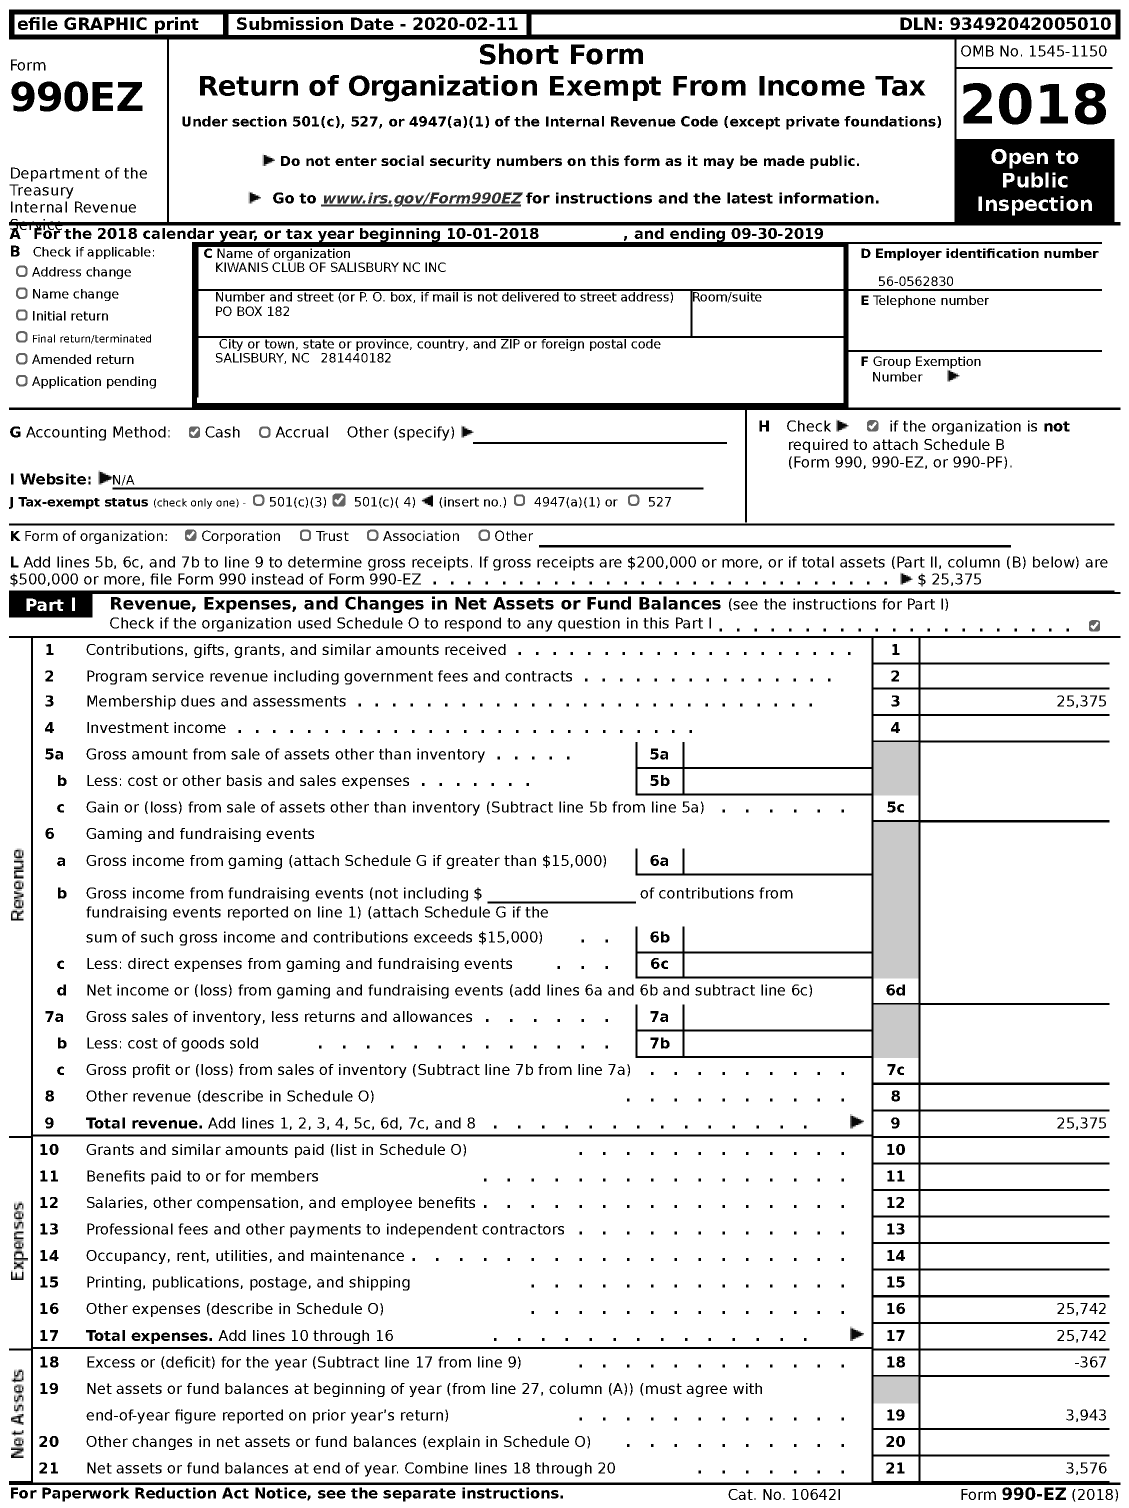 Image of first page of 2018 Form 990EZ for Kiwanis International - K00349 Salisbury